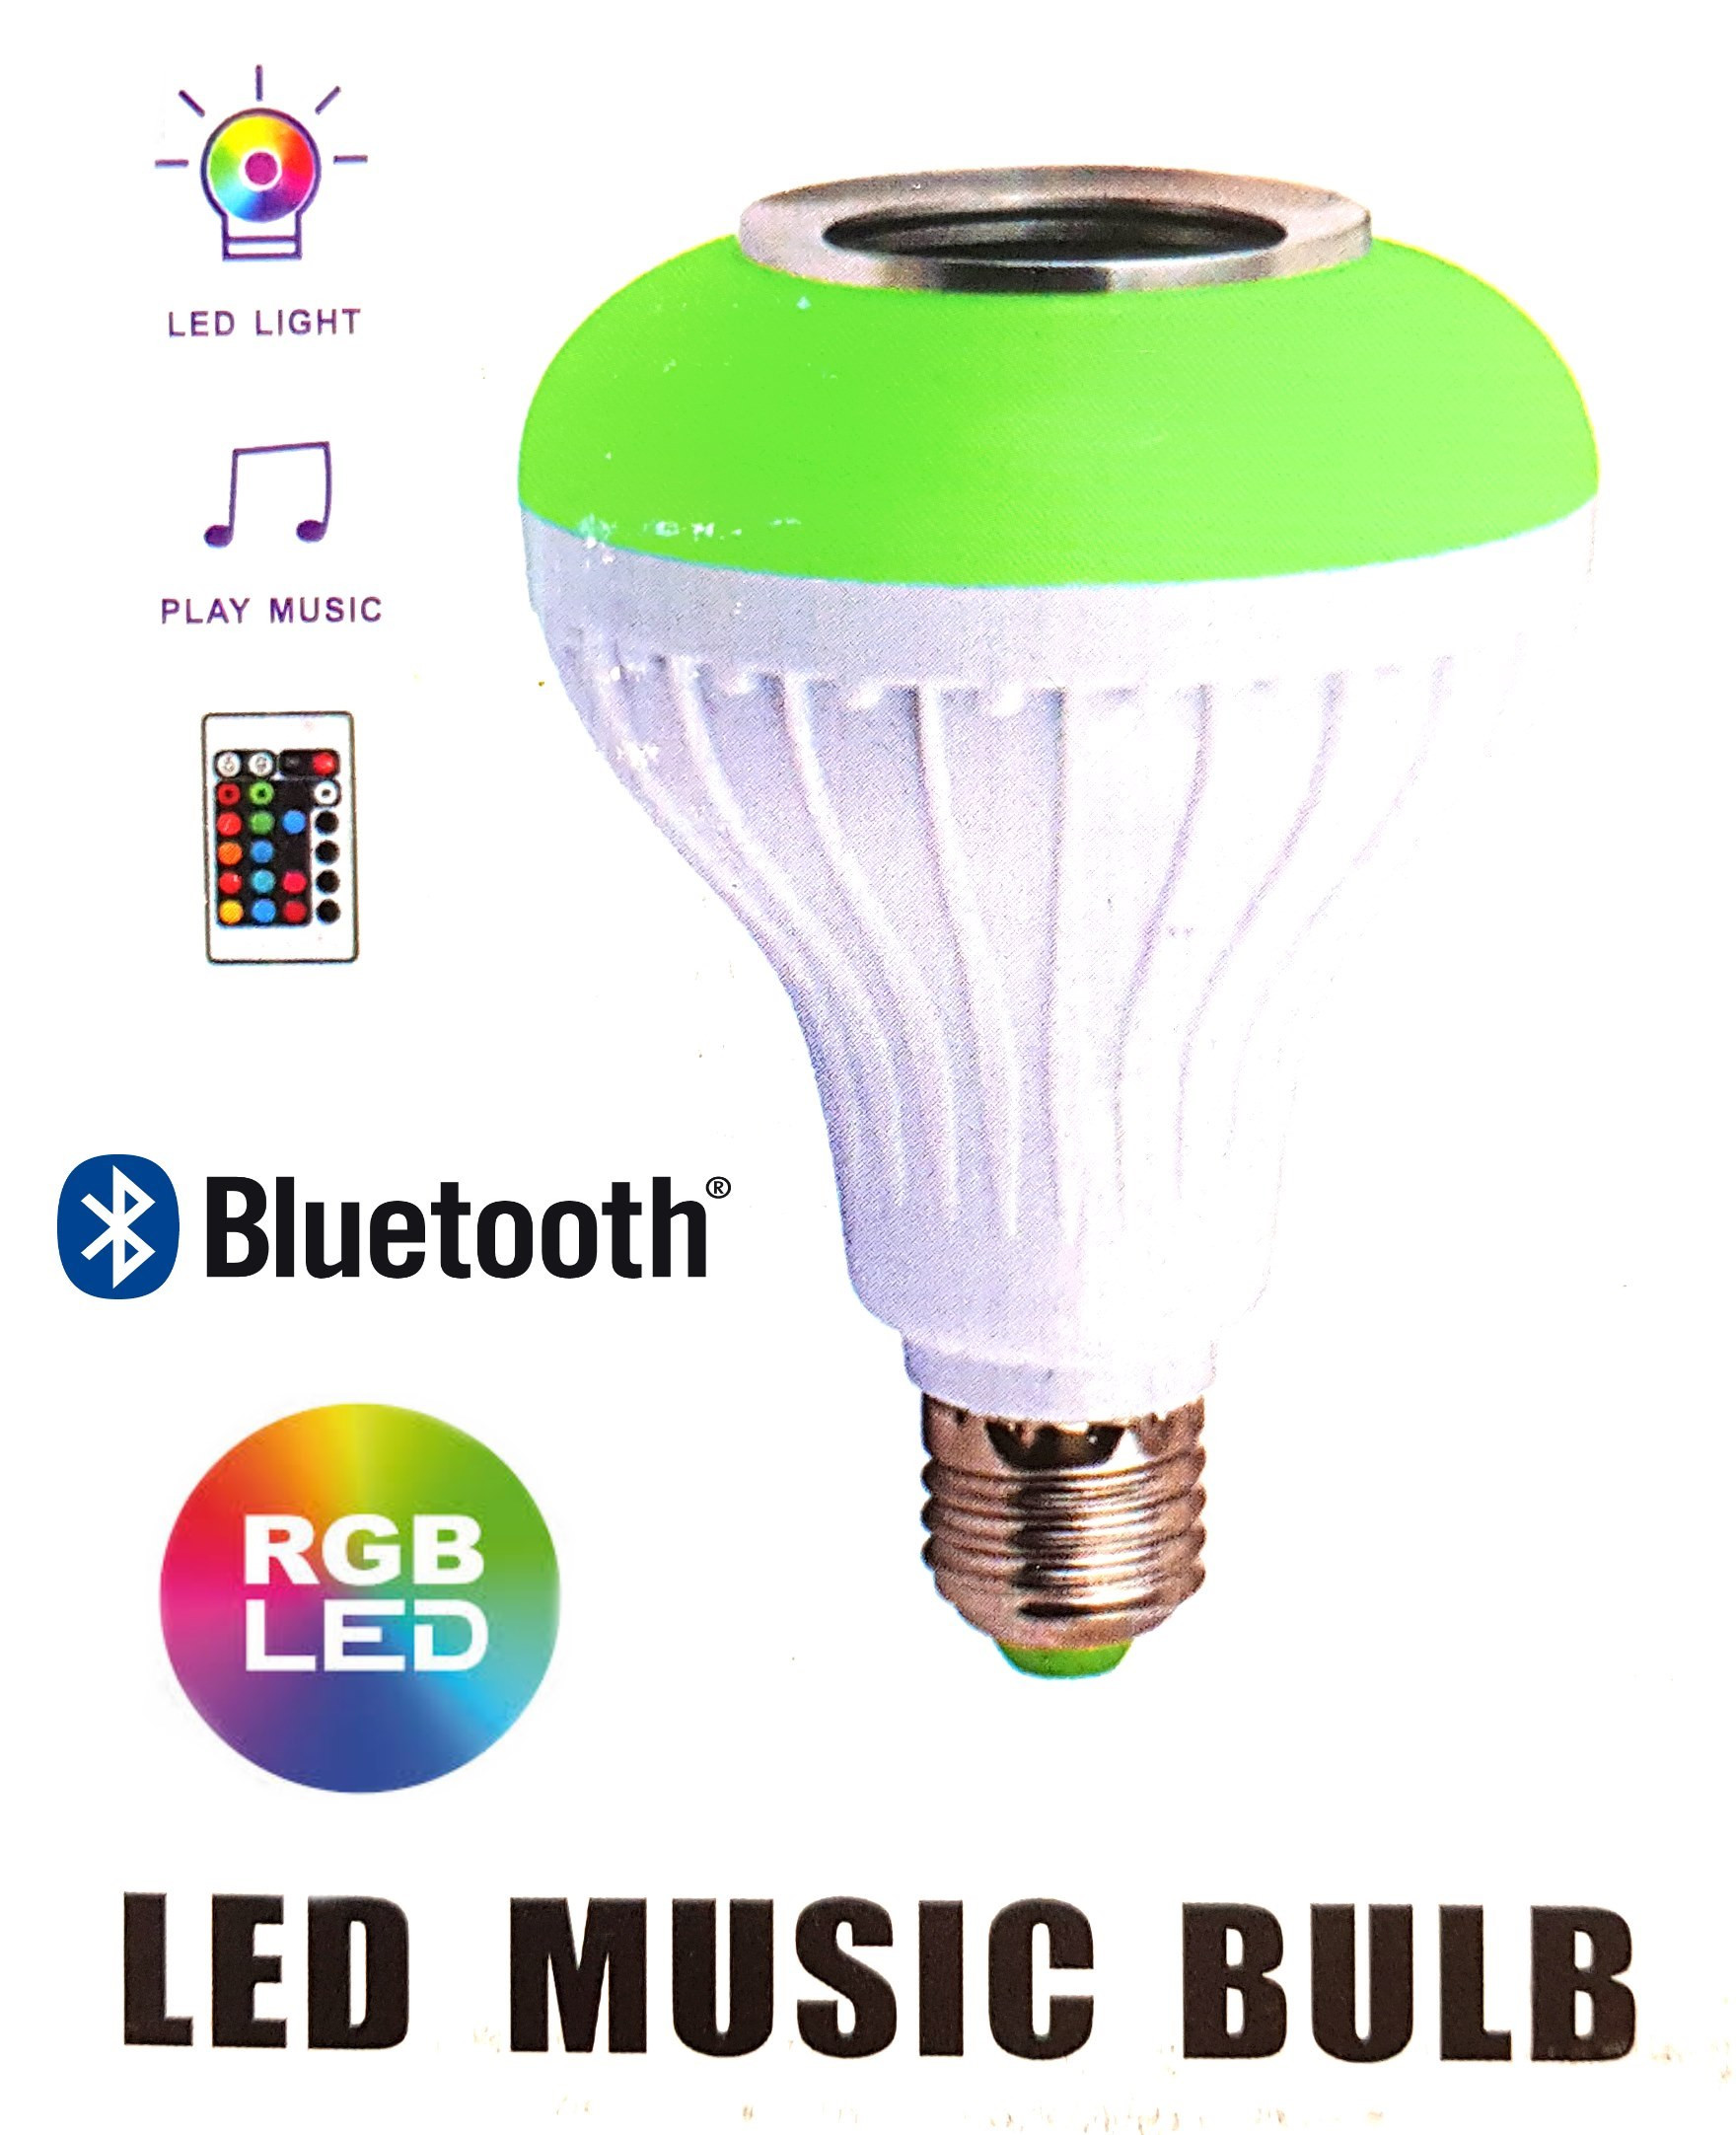 Music Bulb E27 LED RGB music bulb speaker remote control